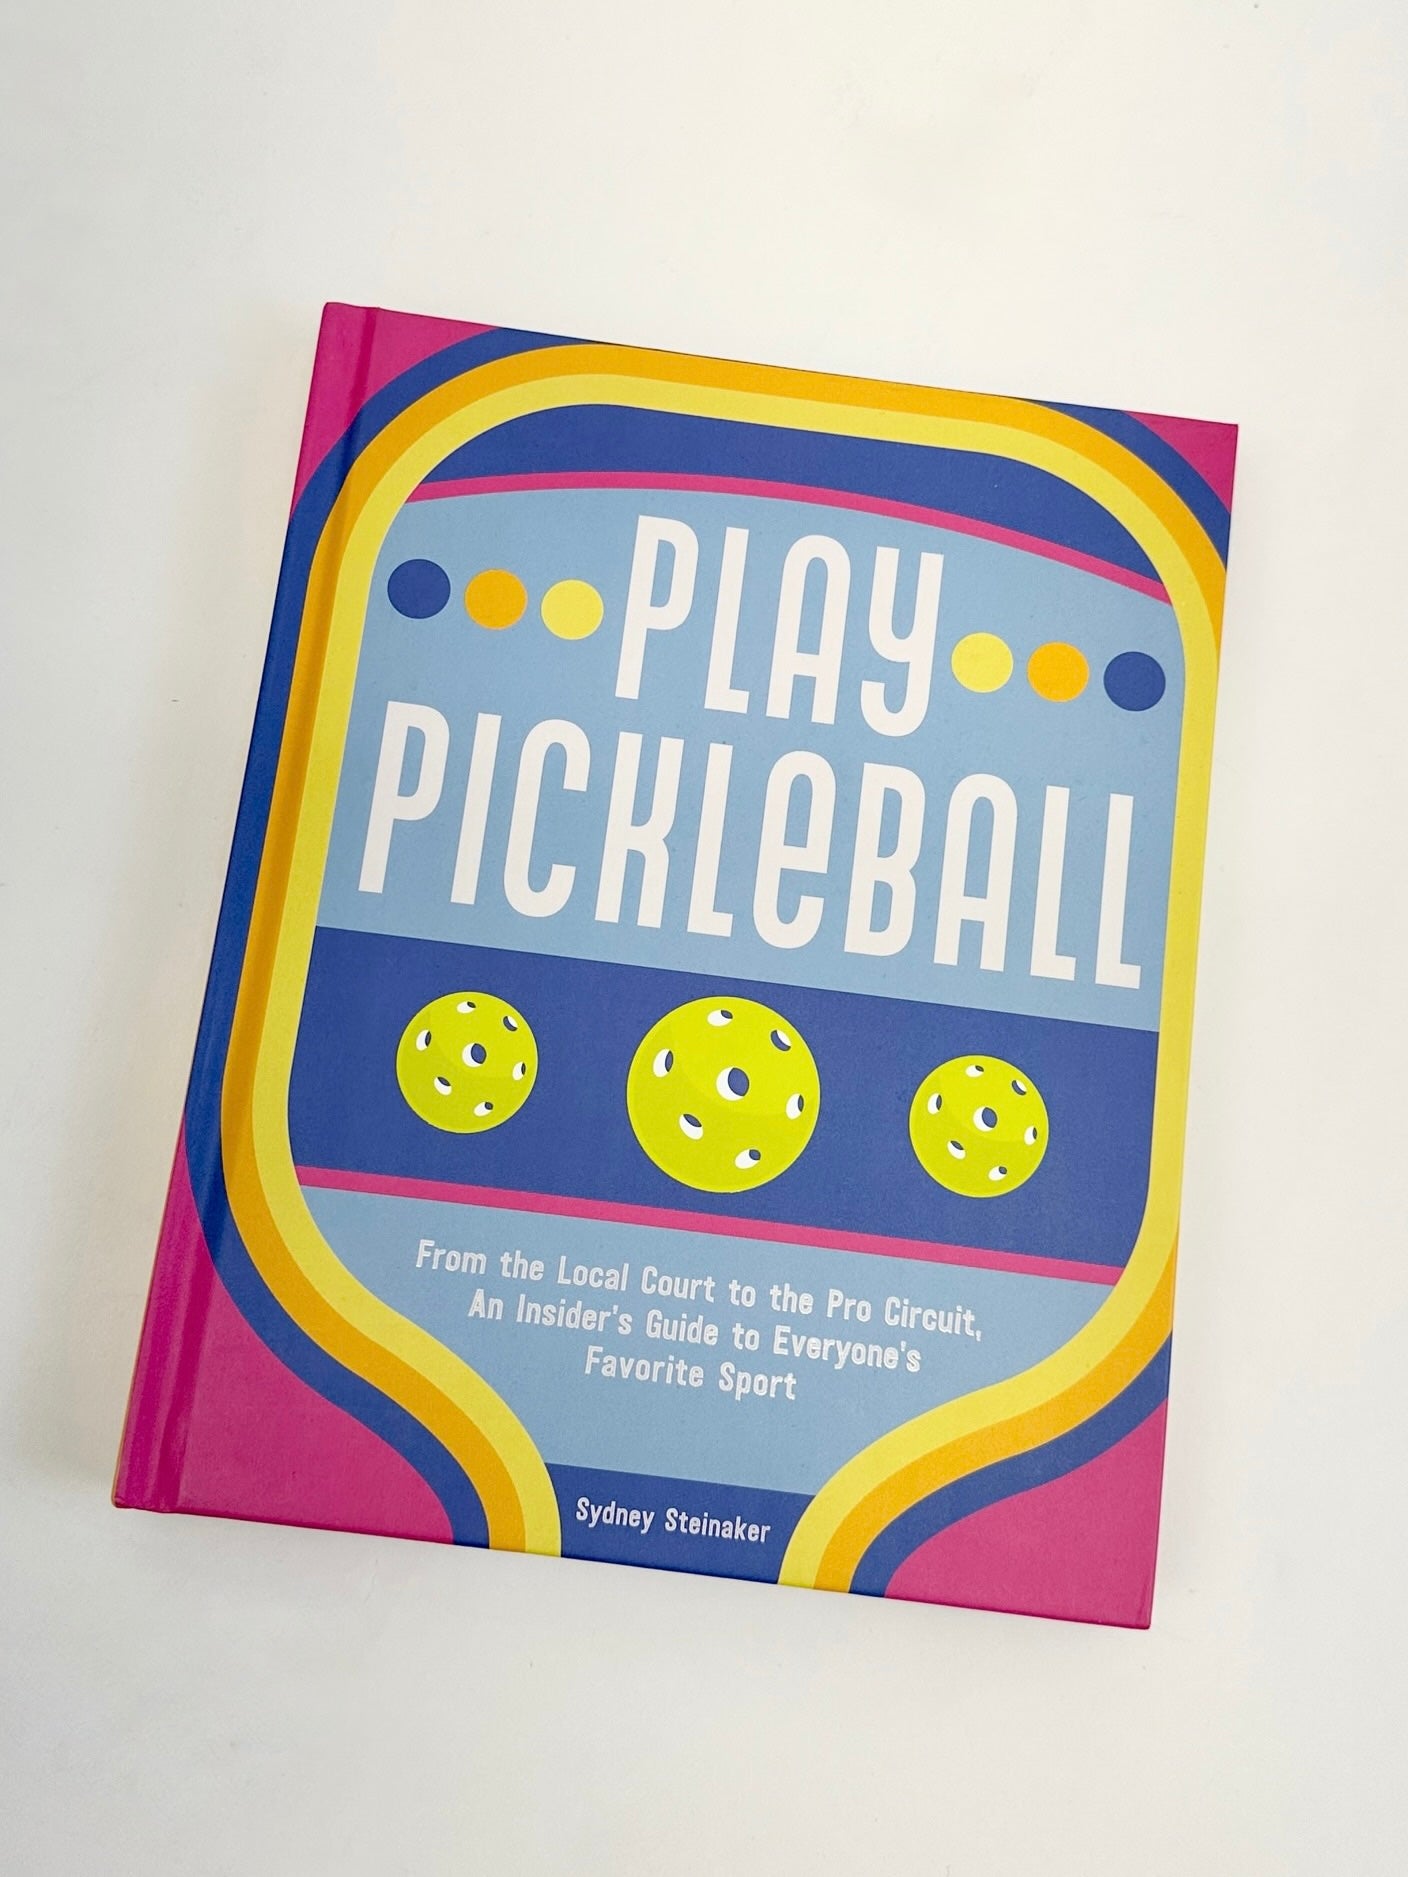 Play Pickleball Book